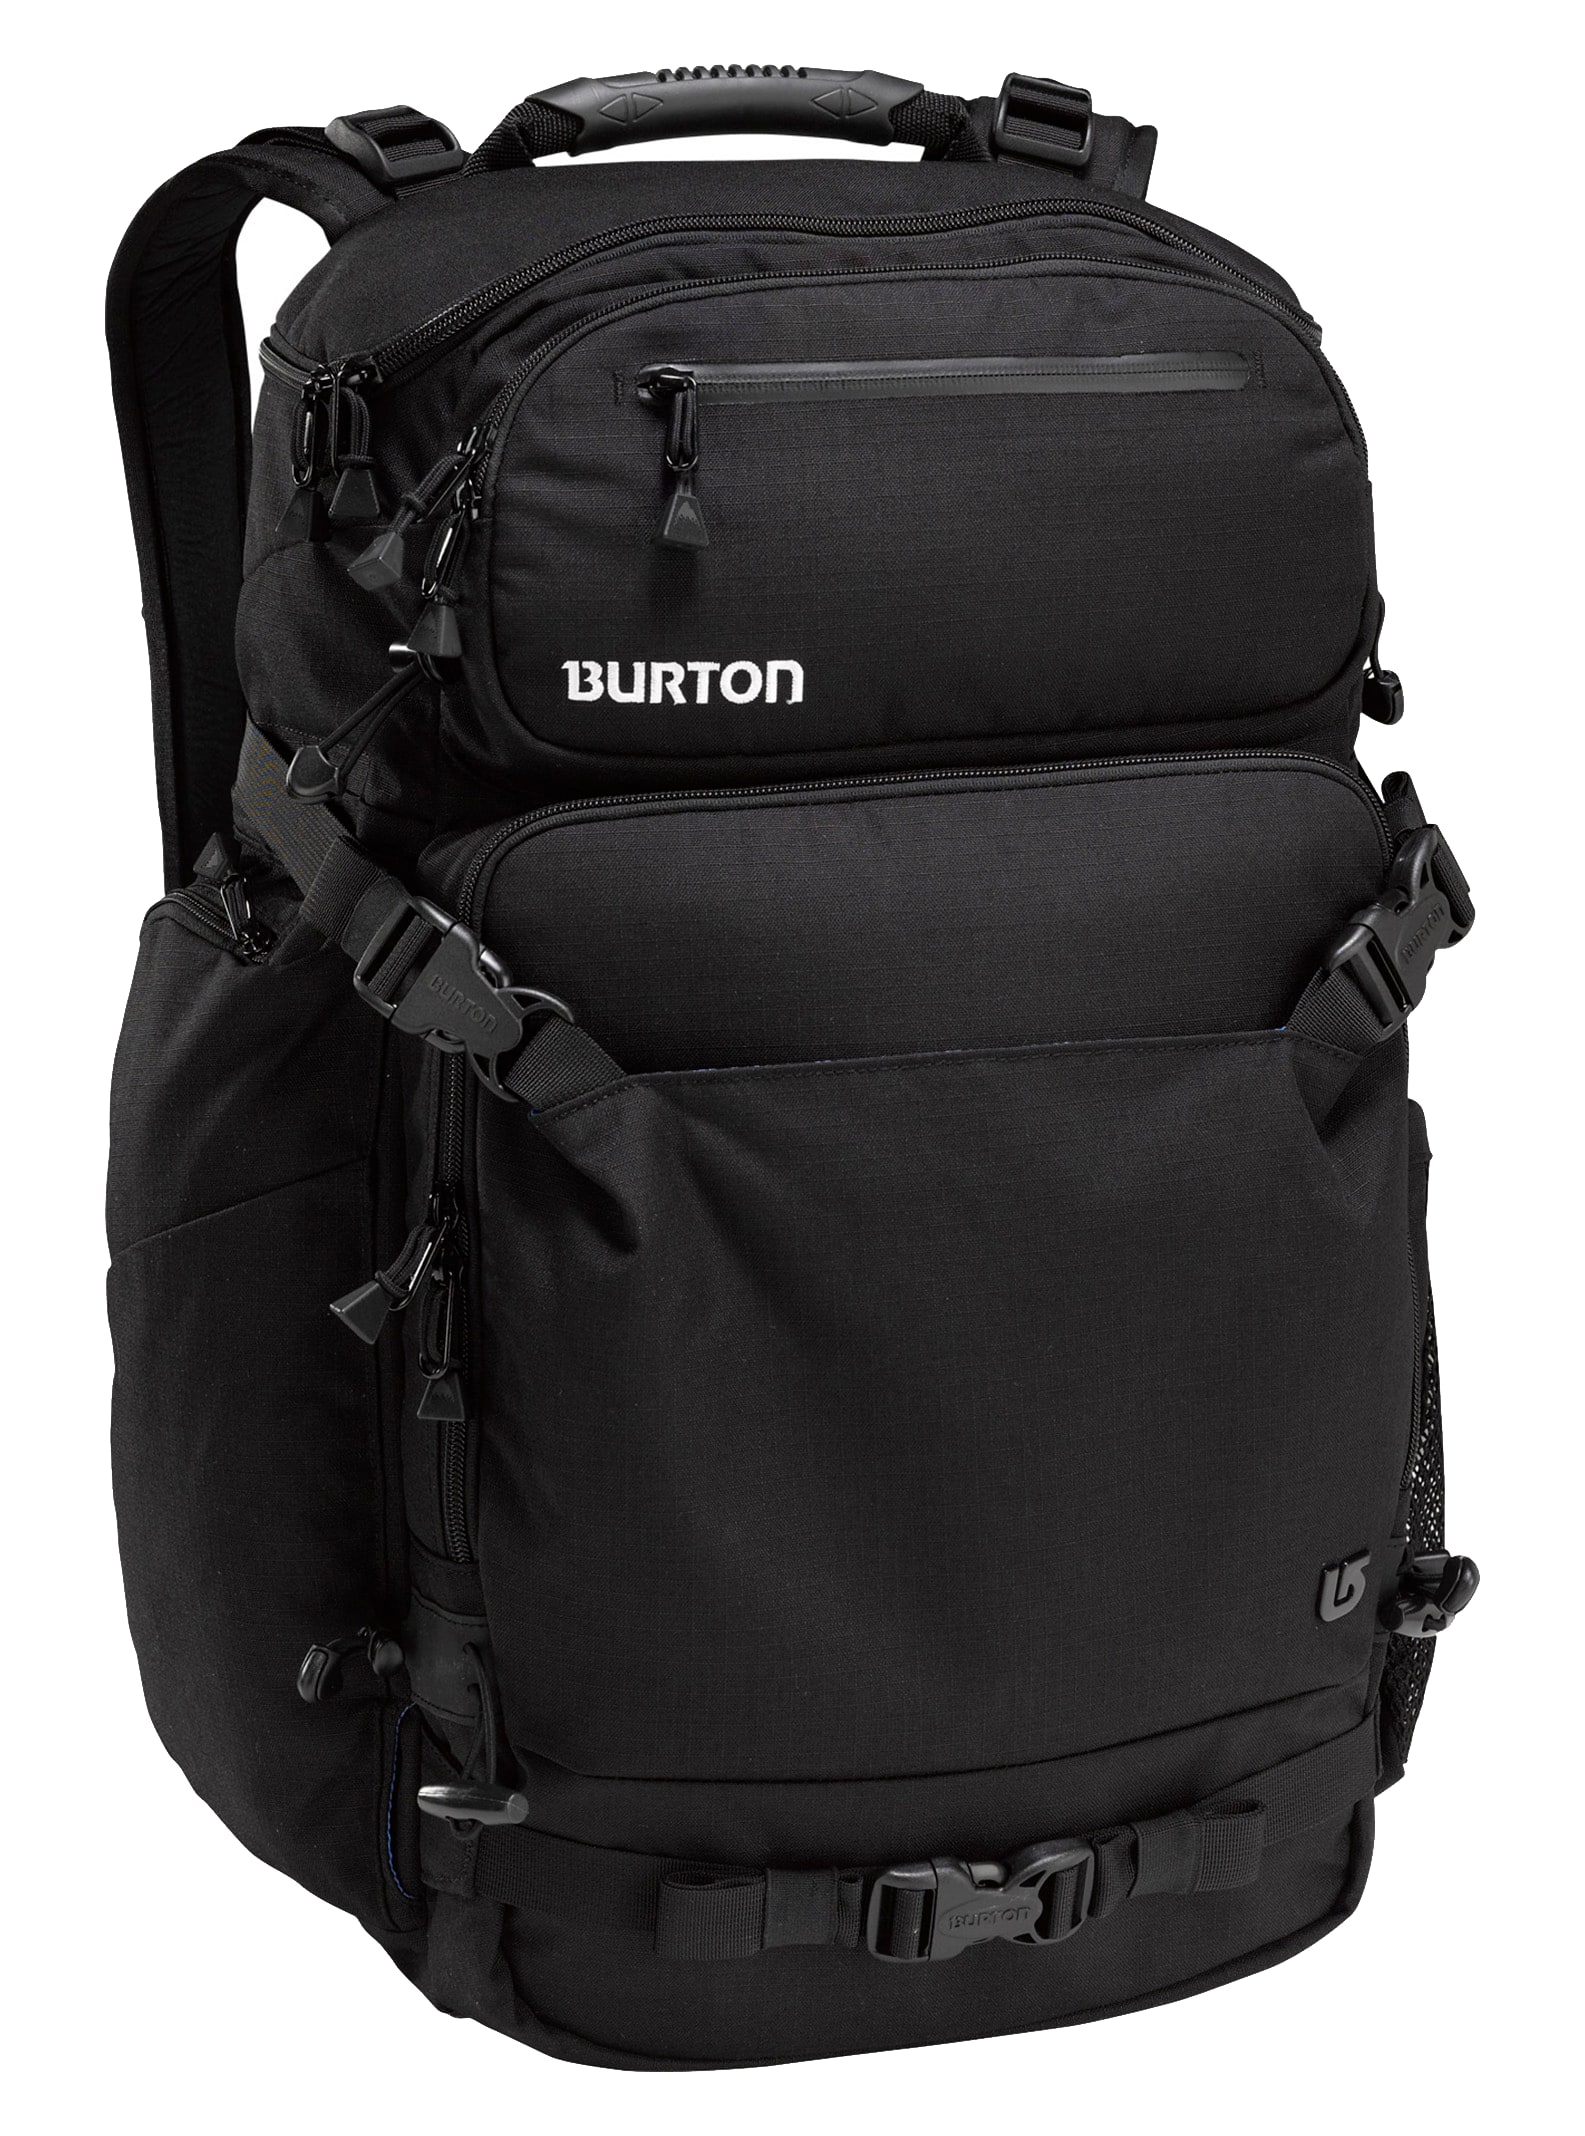 Burton Focus 30L Camera Backpack | Burton.com Winter 2020 US